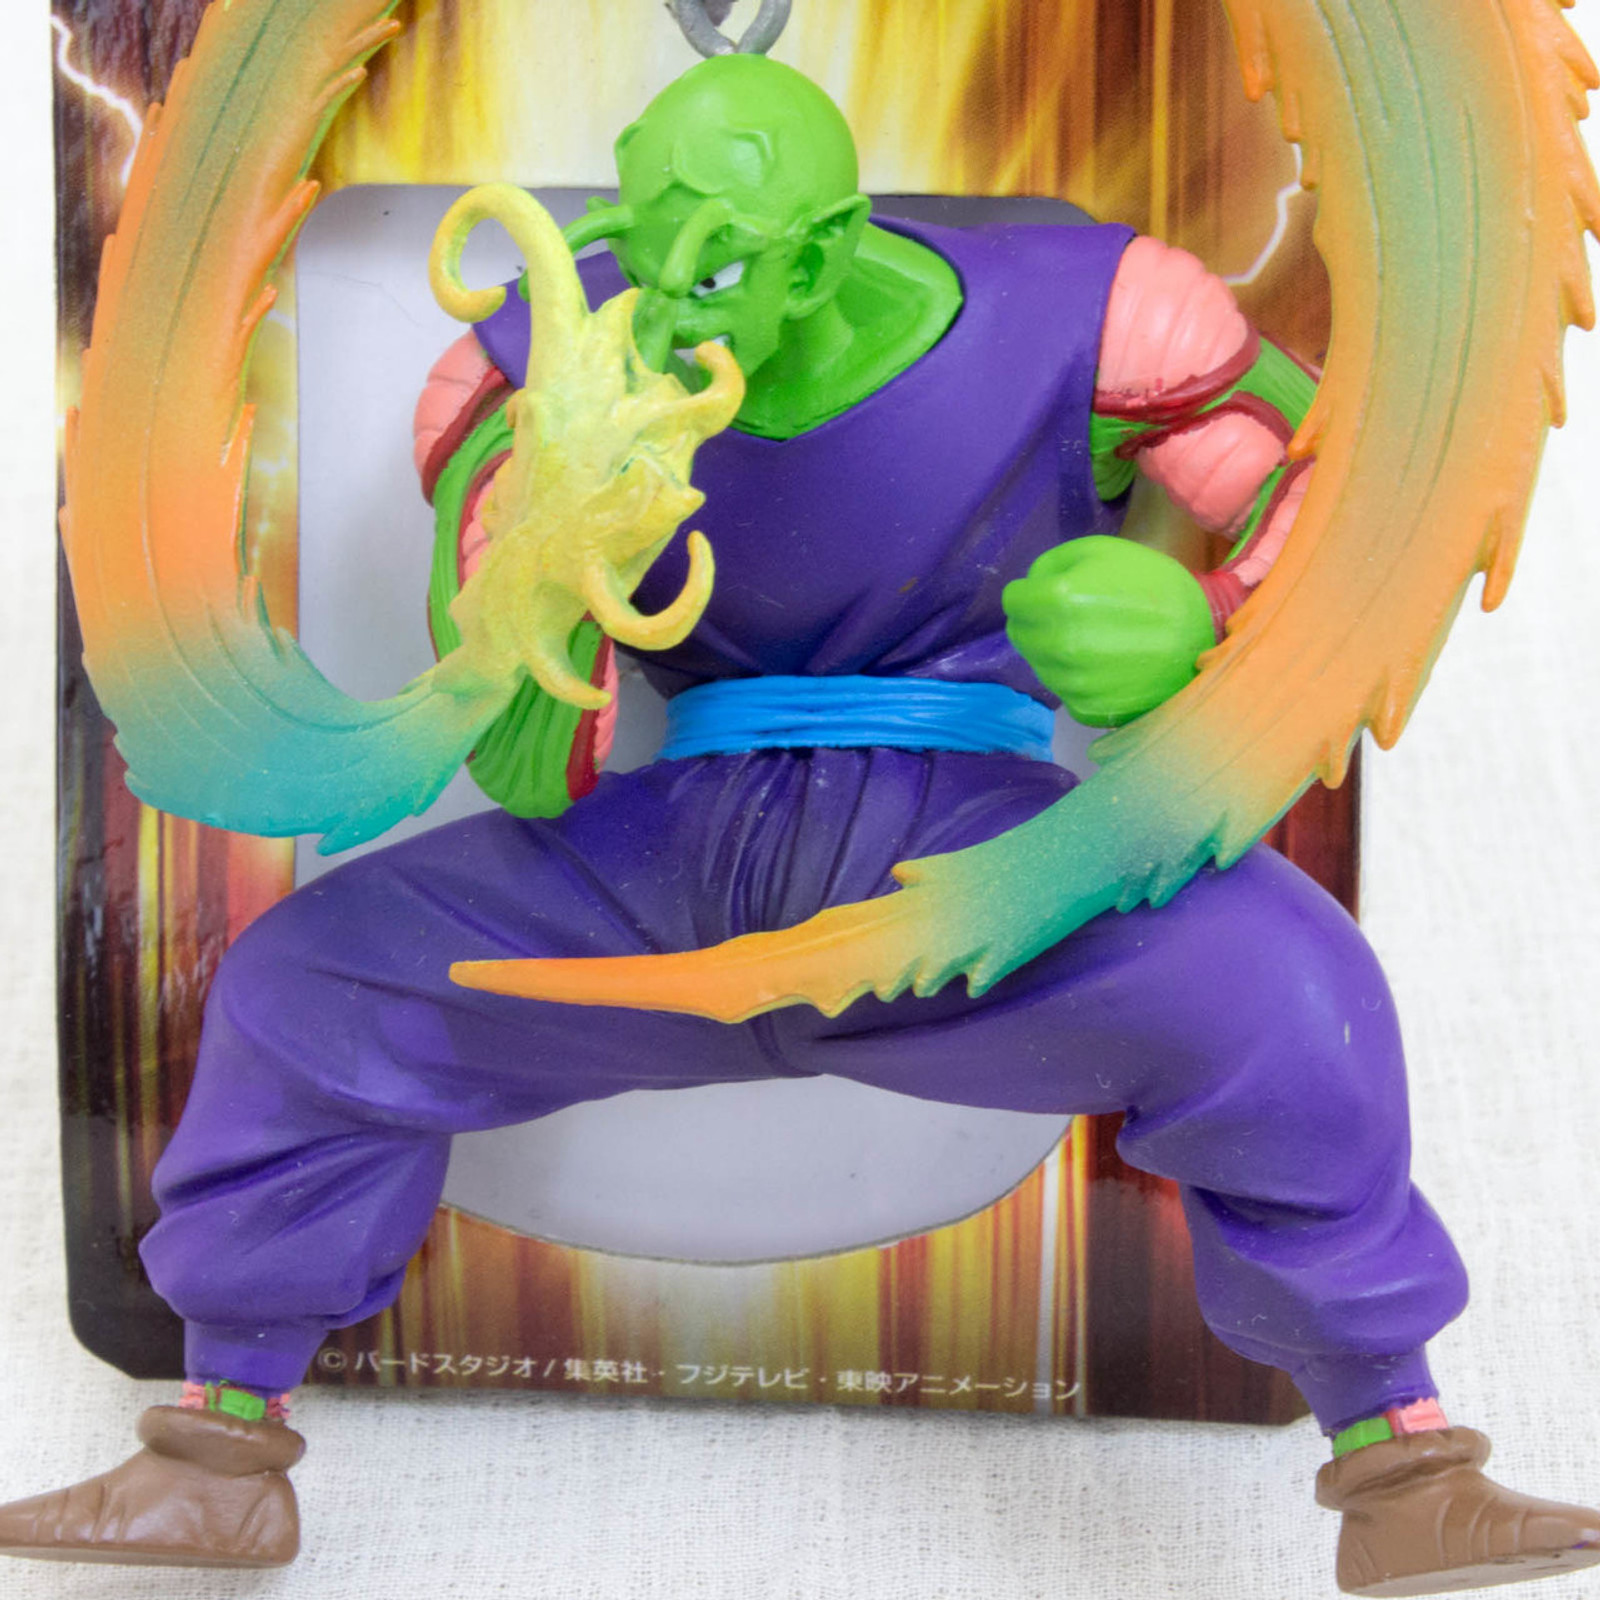 Dragon Ball Z Piccolo Super Effect Mascot Figure Key Chain JAPAN ANIME MANGA 3